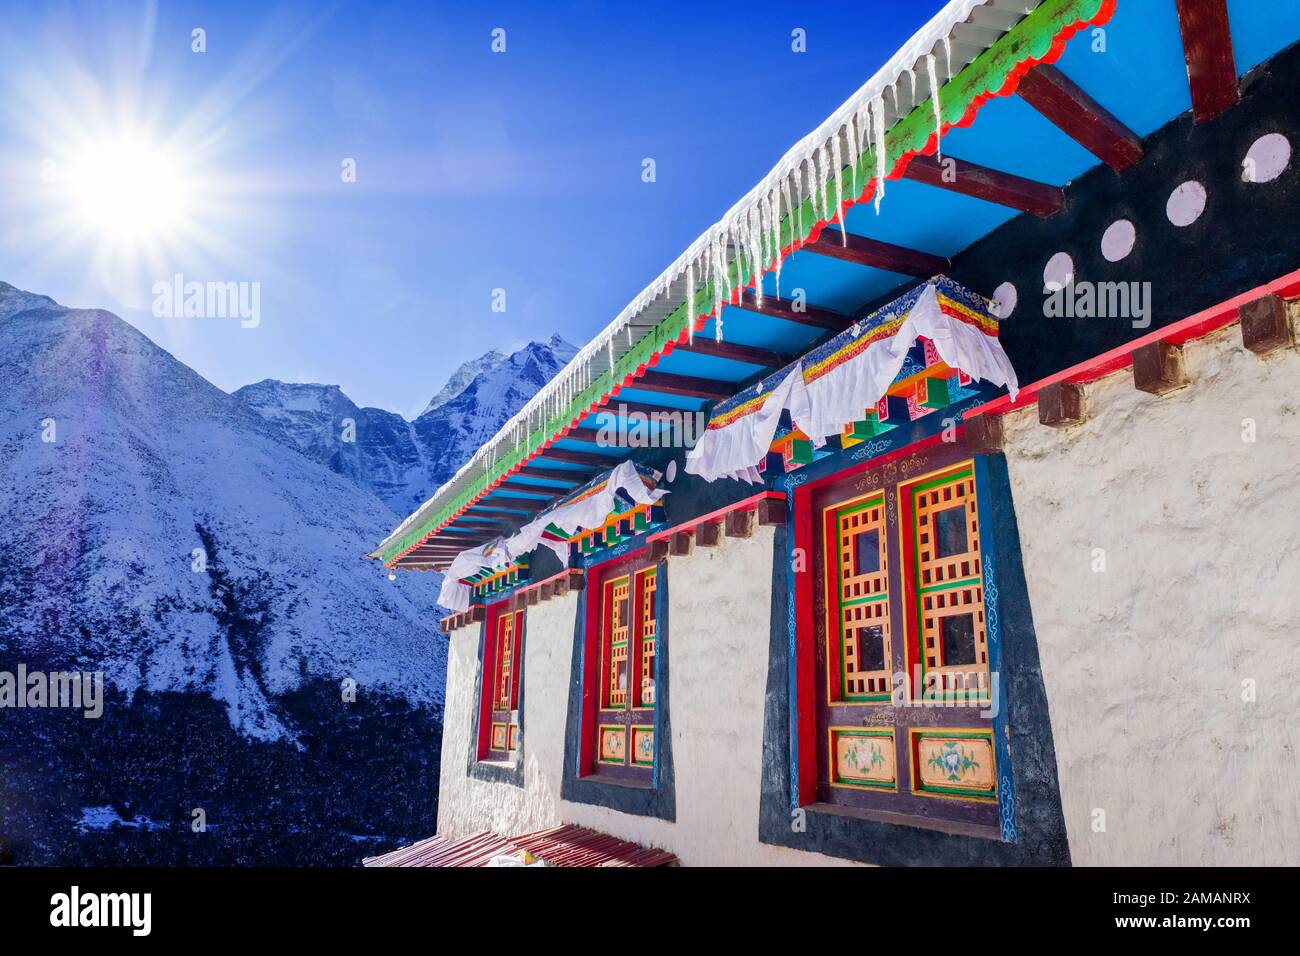 Pangboche Gompa (monastero buddista tibetano) nella regione di Khumbu dell'Himalaya nepalese Foto Stock